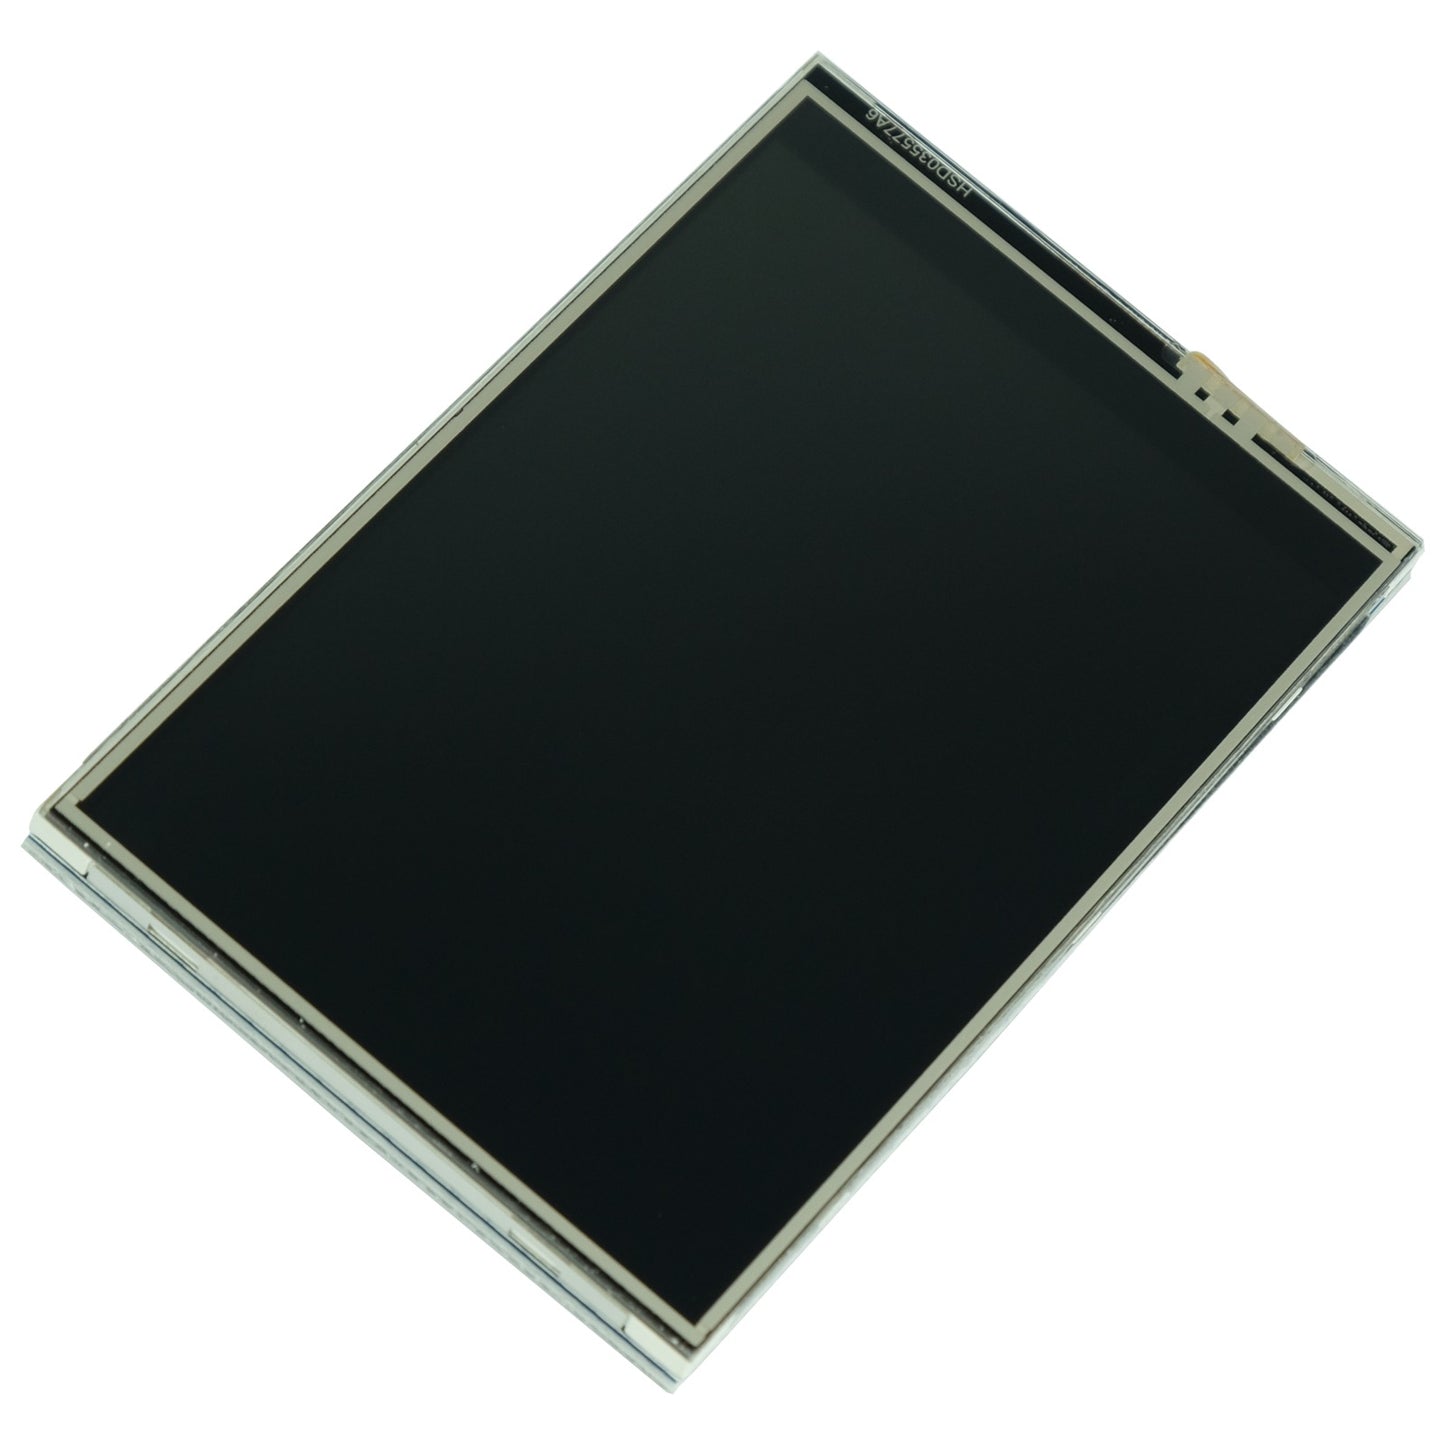 3.5" TFT Touchscreen, SPI Display for Raspberry Pi